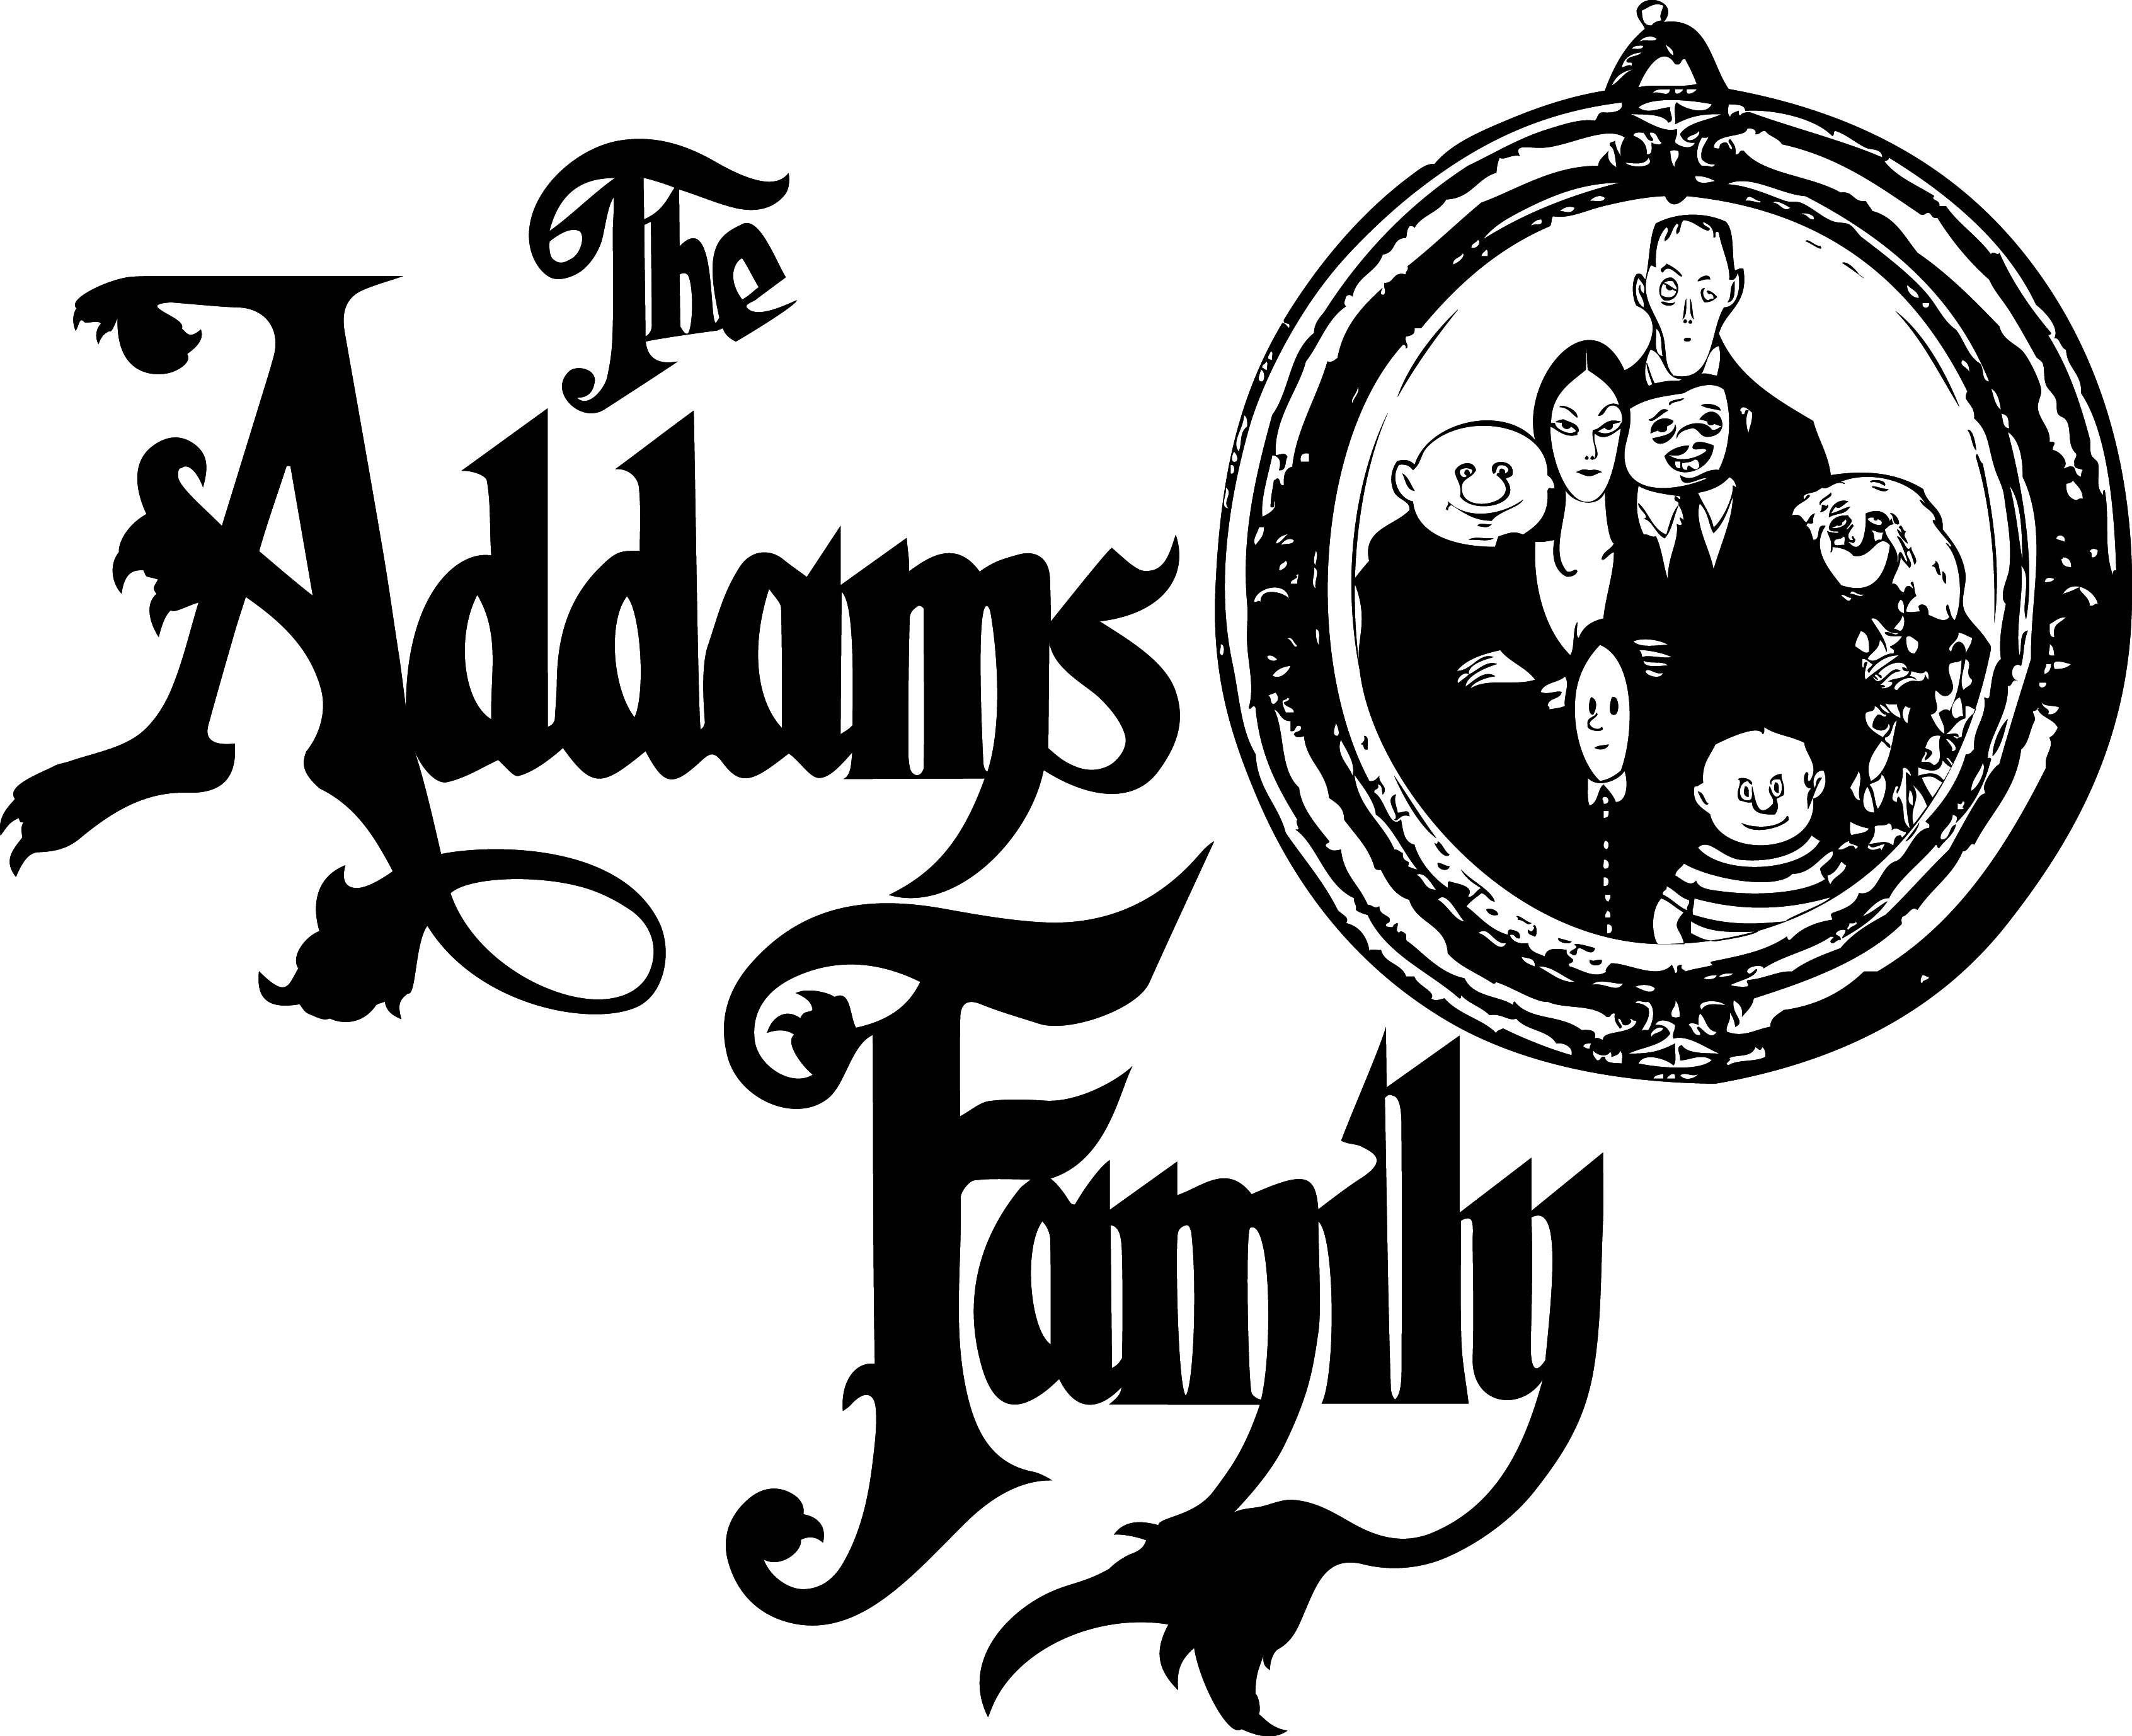 Das Addams Family Logo PNG Transparent Image